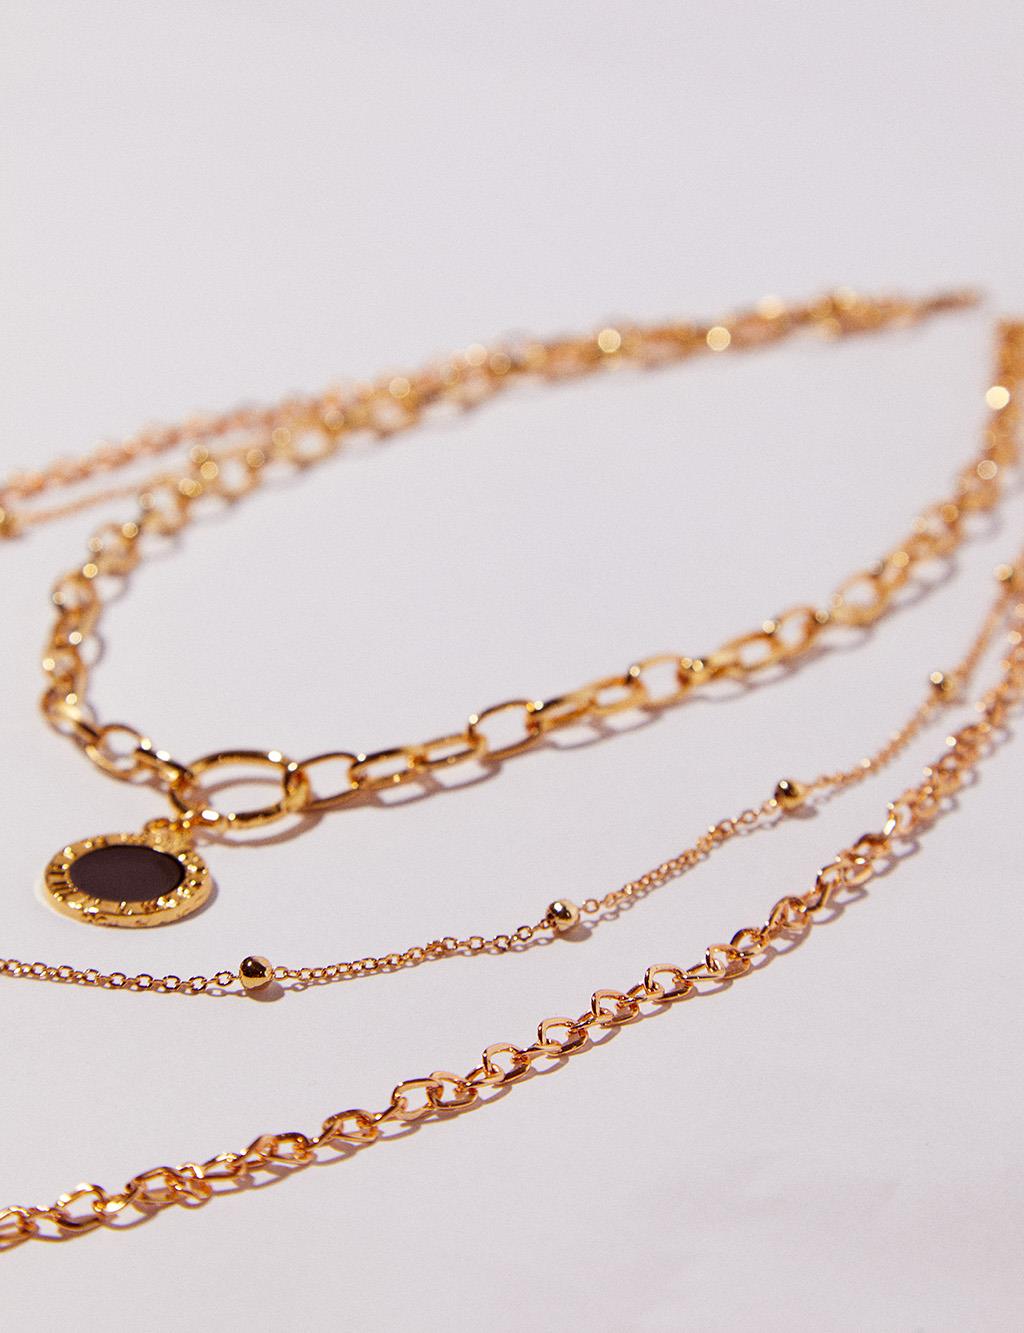 Triple Locket Chain Necklace Gold Color